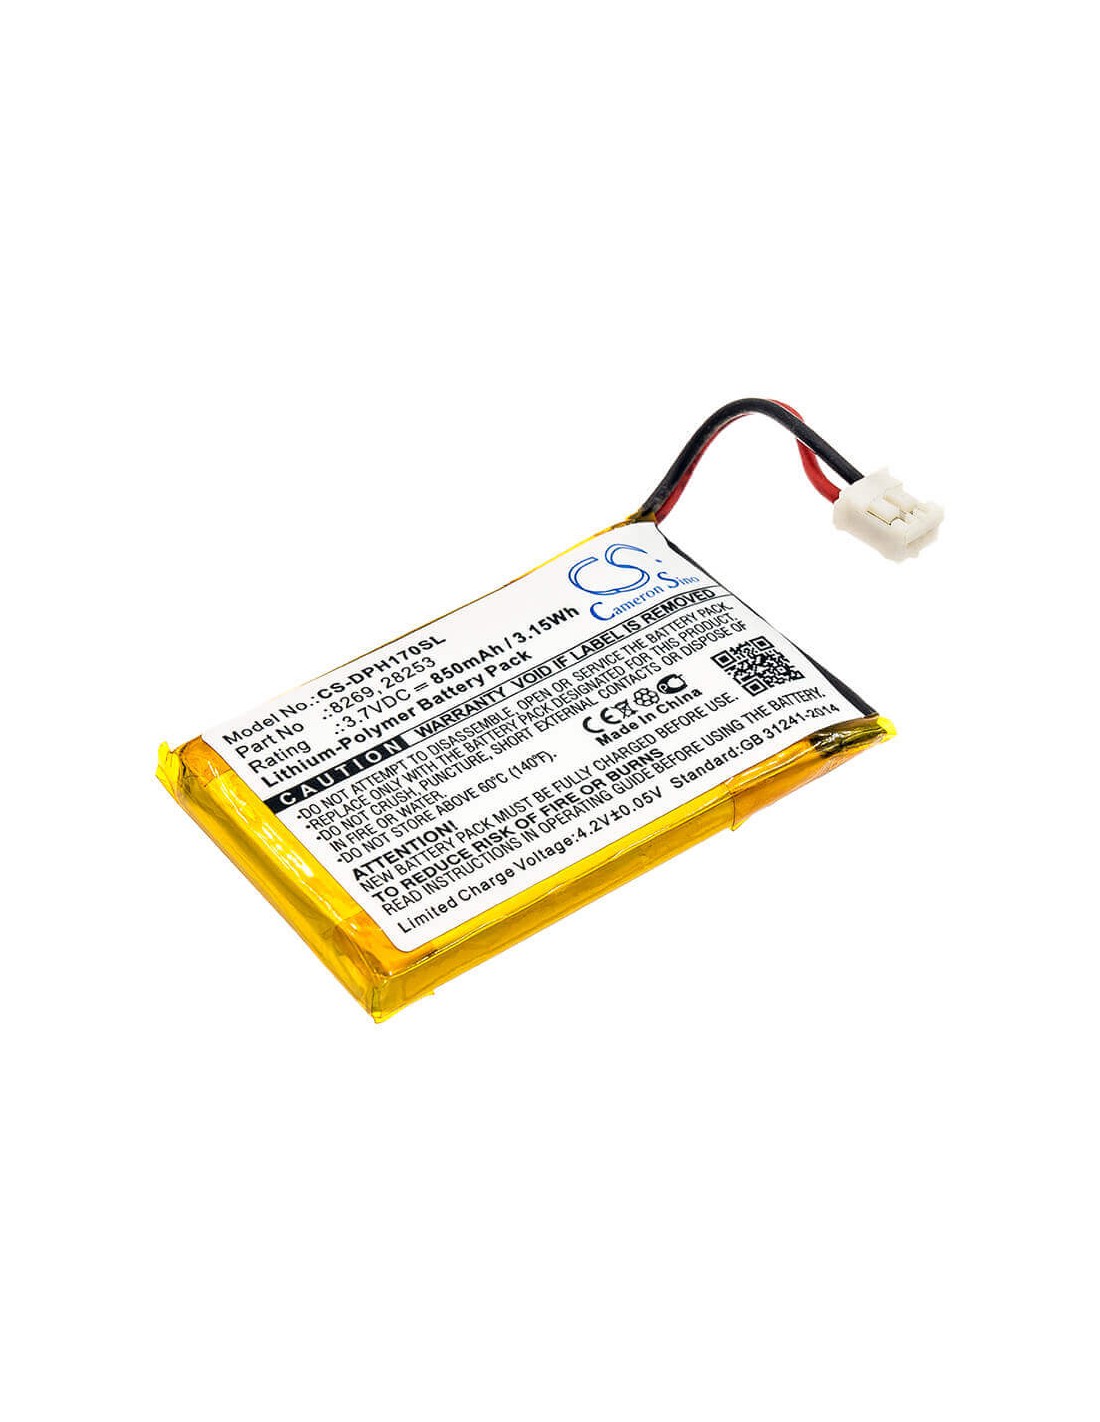 Battery for Marmitek, 210, Doorphone 170, Vdp210bp 3.7V, 850mAh - 3.15Wh